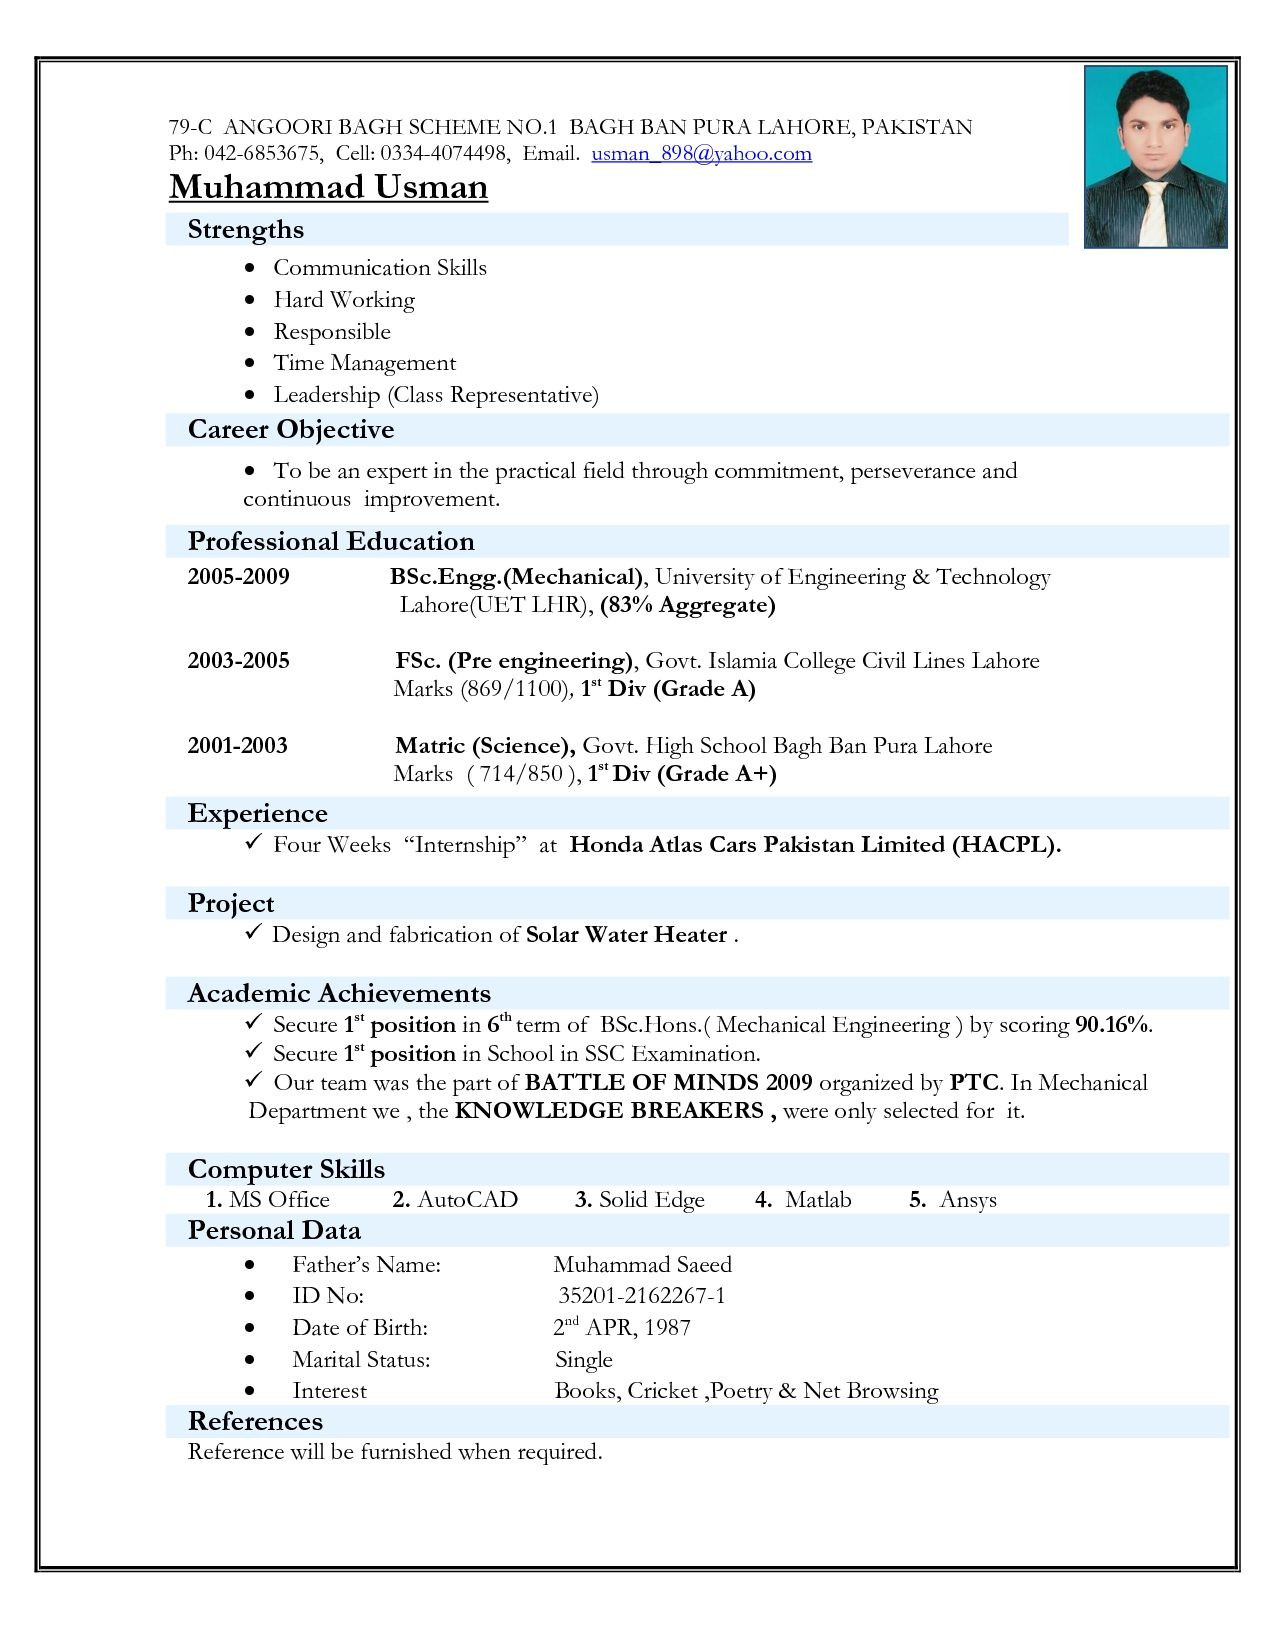 Resume Template for Mechanical Engineer Fresher 9 Cv Ideas Mechanical Engineer Resume, Engineering Resume …